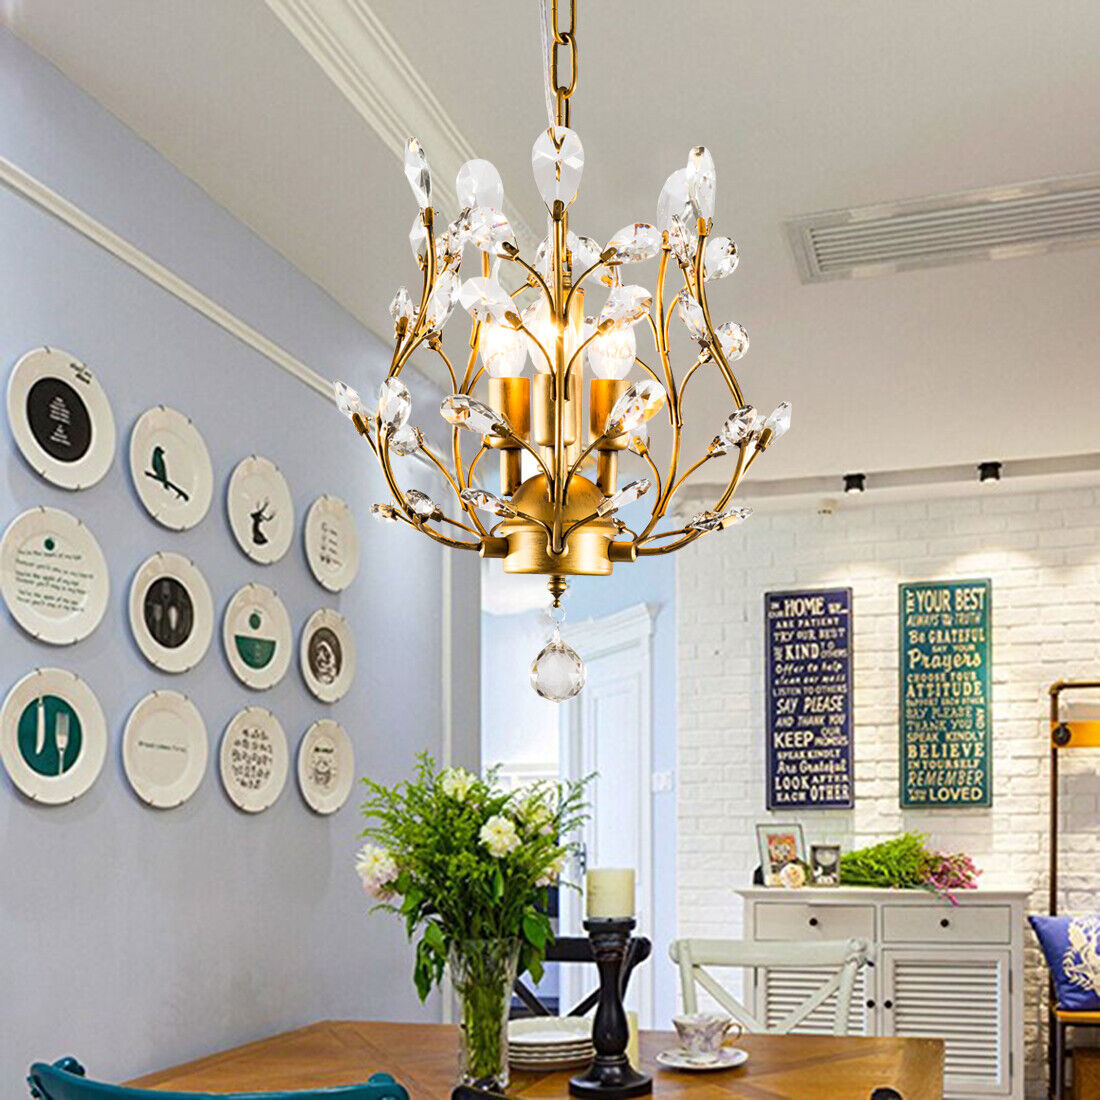 Vintage Chandeliers K9 Crystal Ceiling Light Fixtures Pendant Lamp Living Room